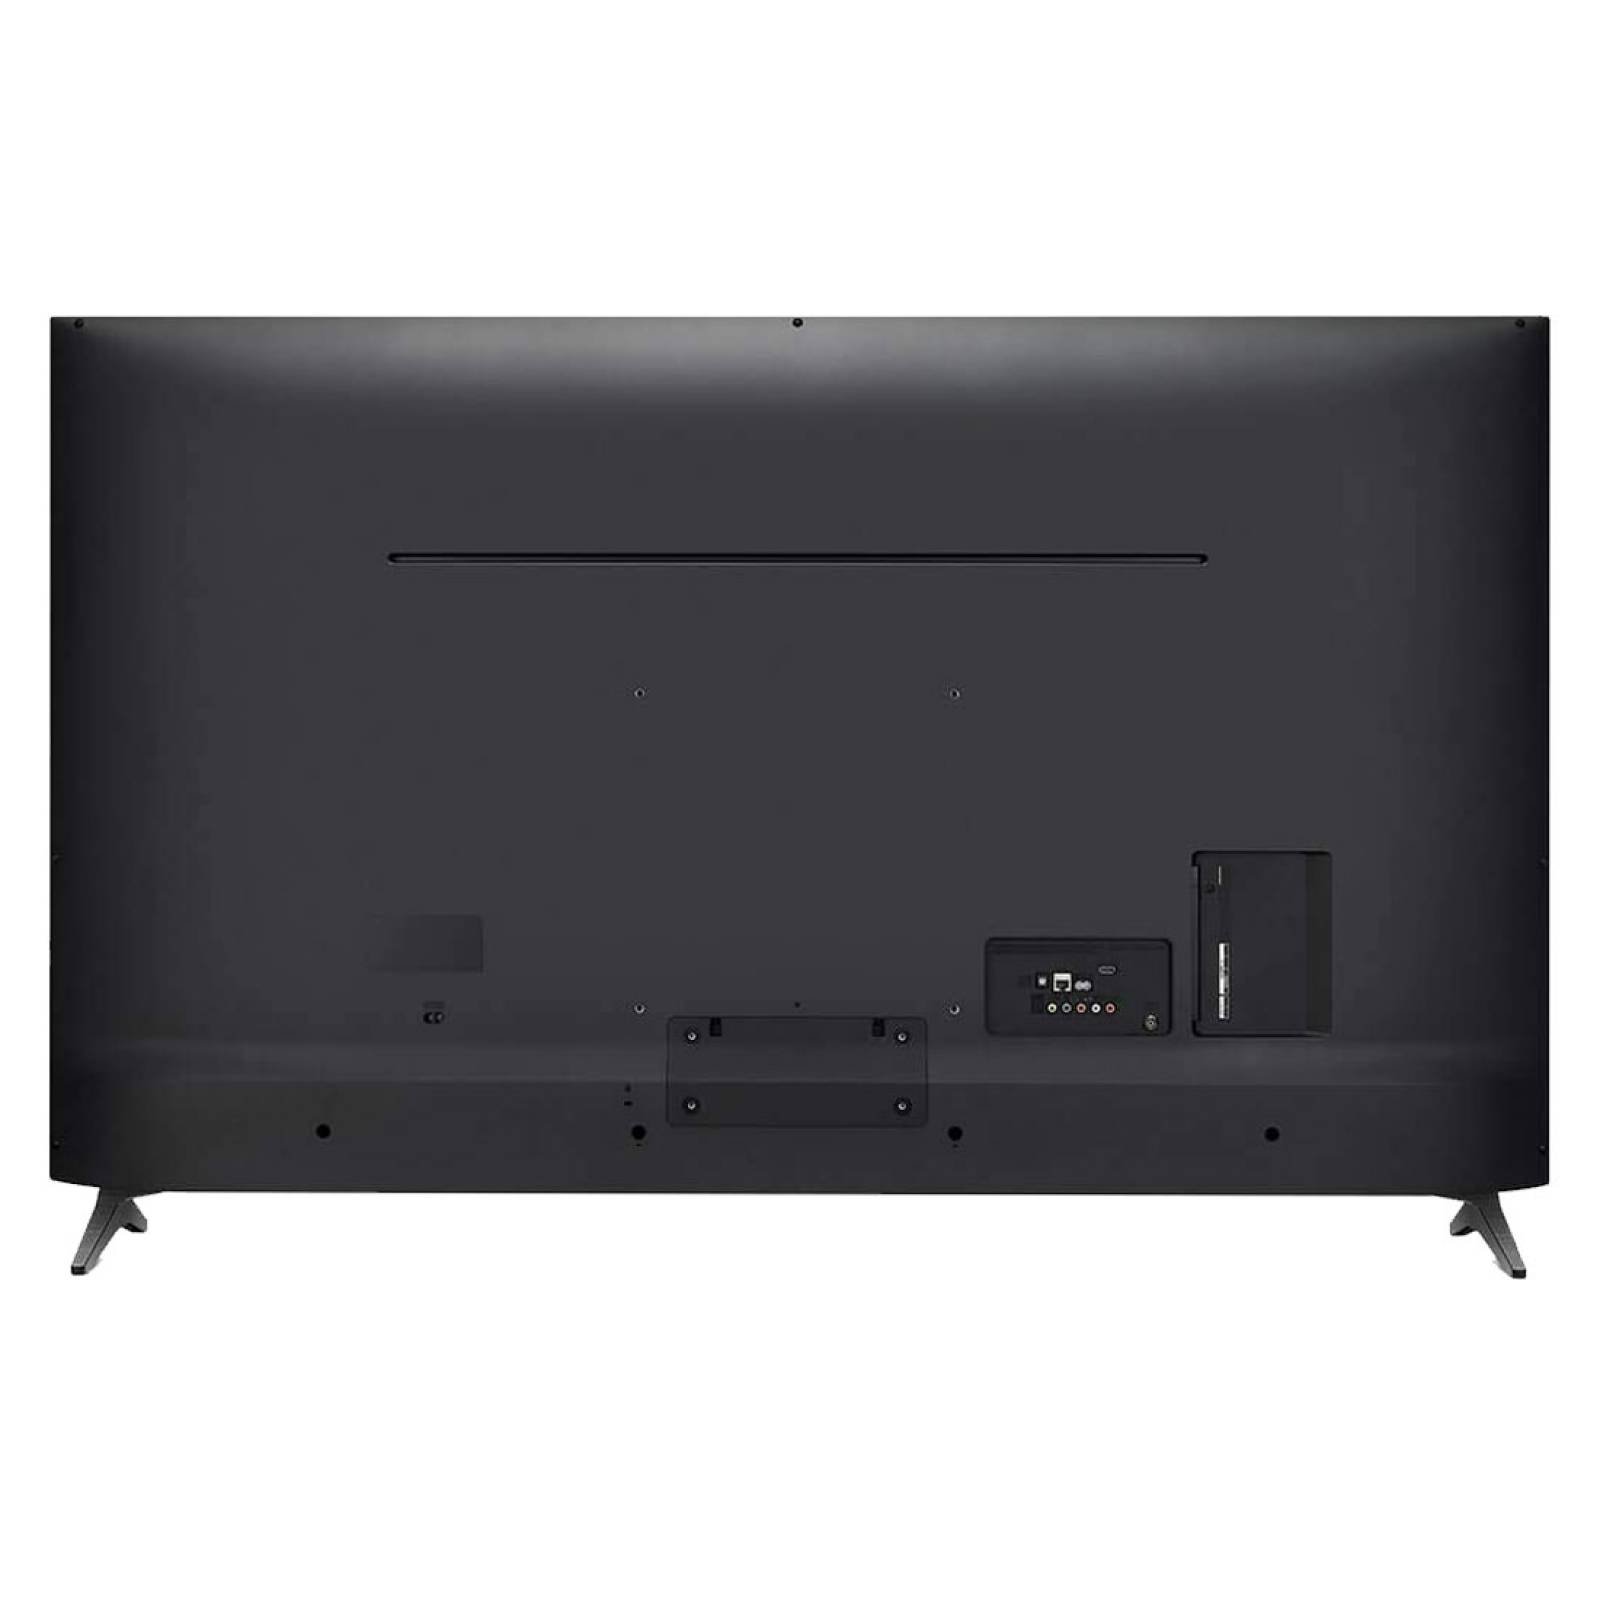 Pantalla Smart Tv LED 49 Pulg 4K Ultra HD 49UK6090PUA LG